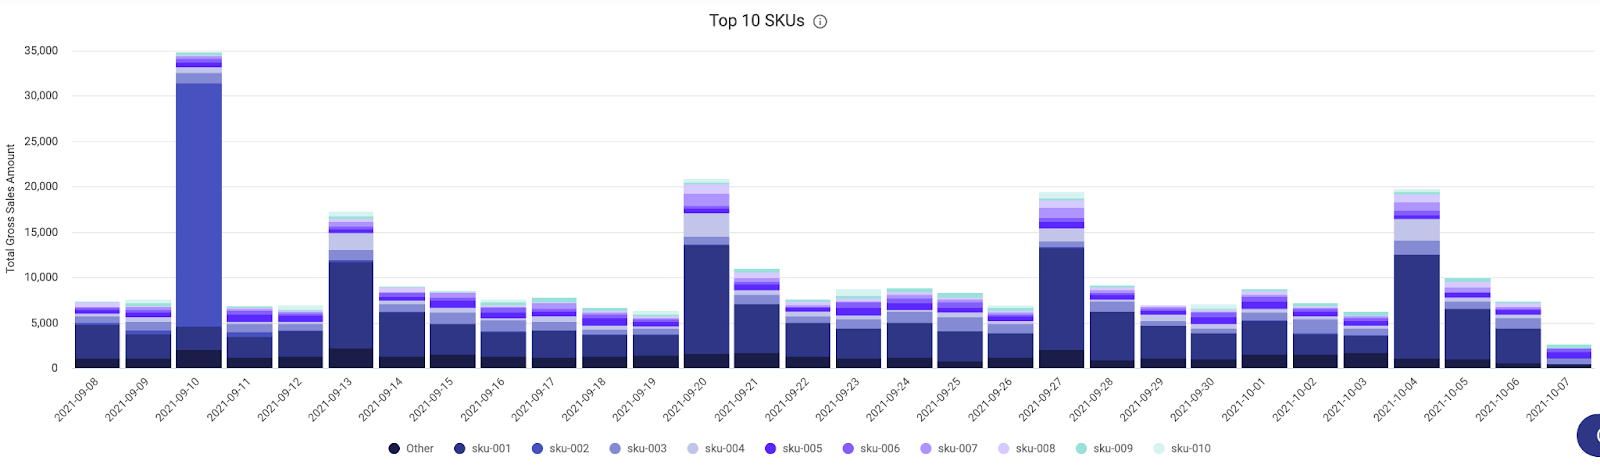 Top 10 SKUs graph in the enhanced analytics suite.